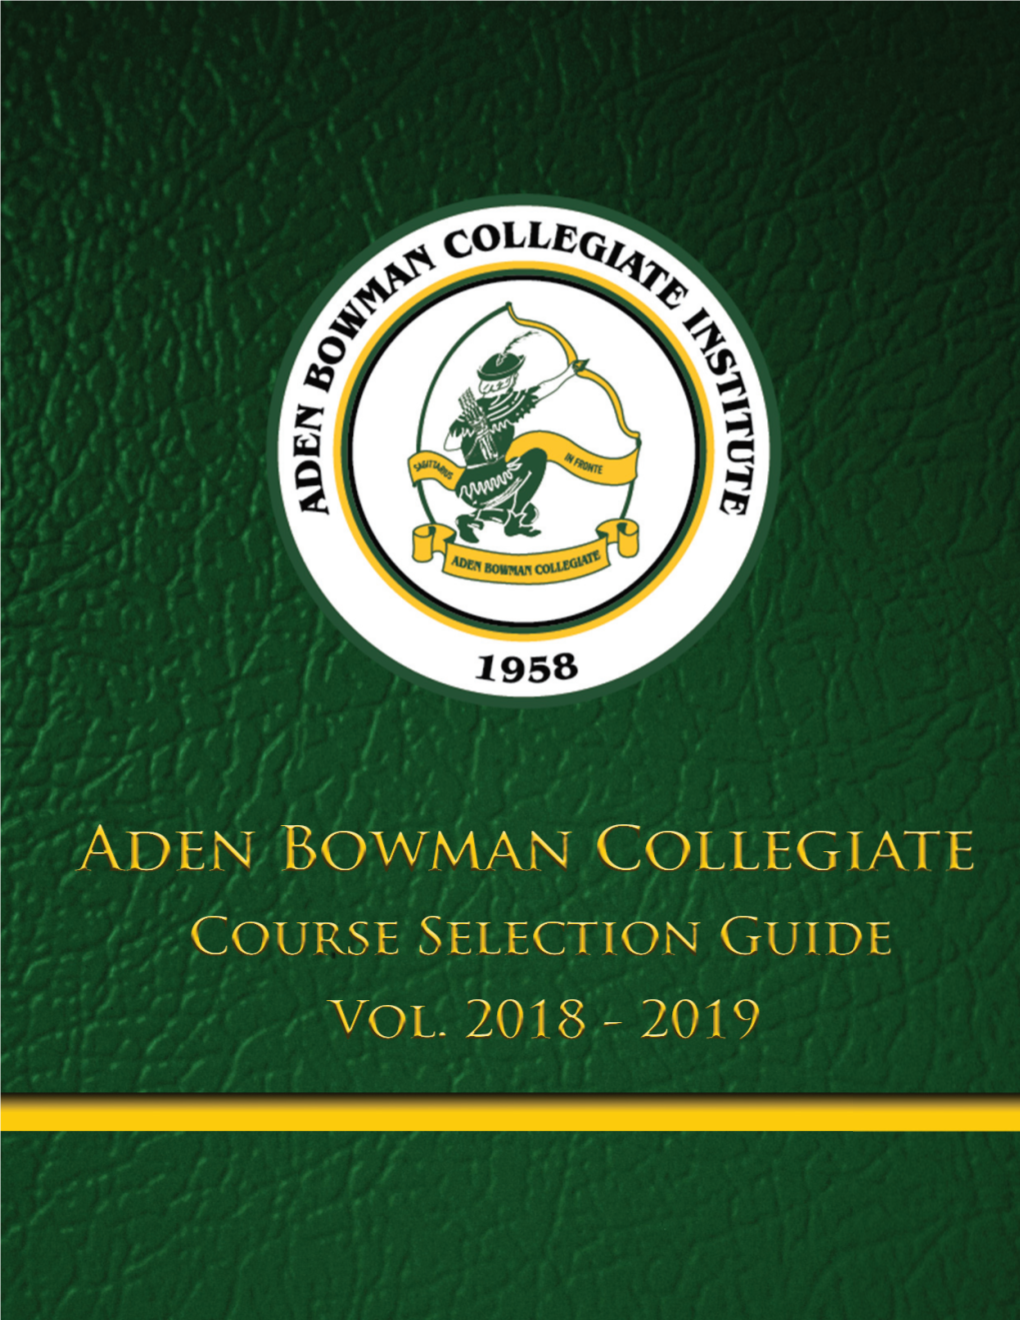 Aden Bowman Collegiate